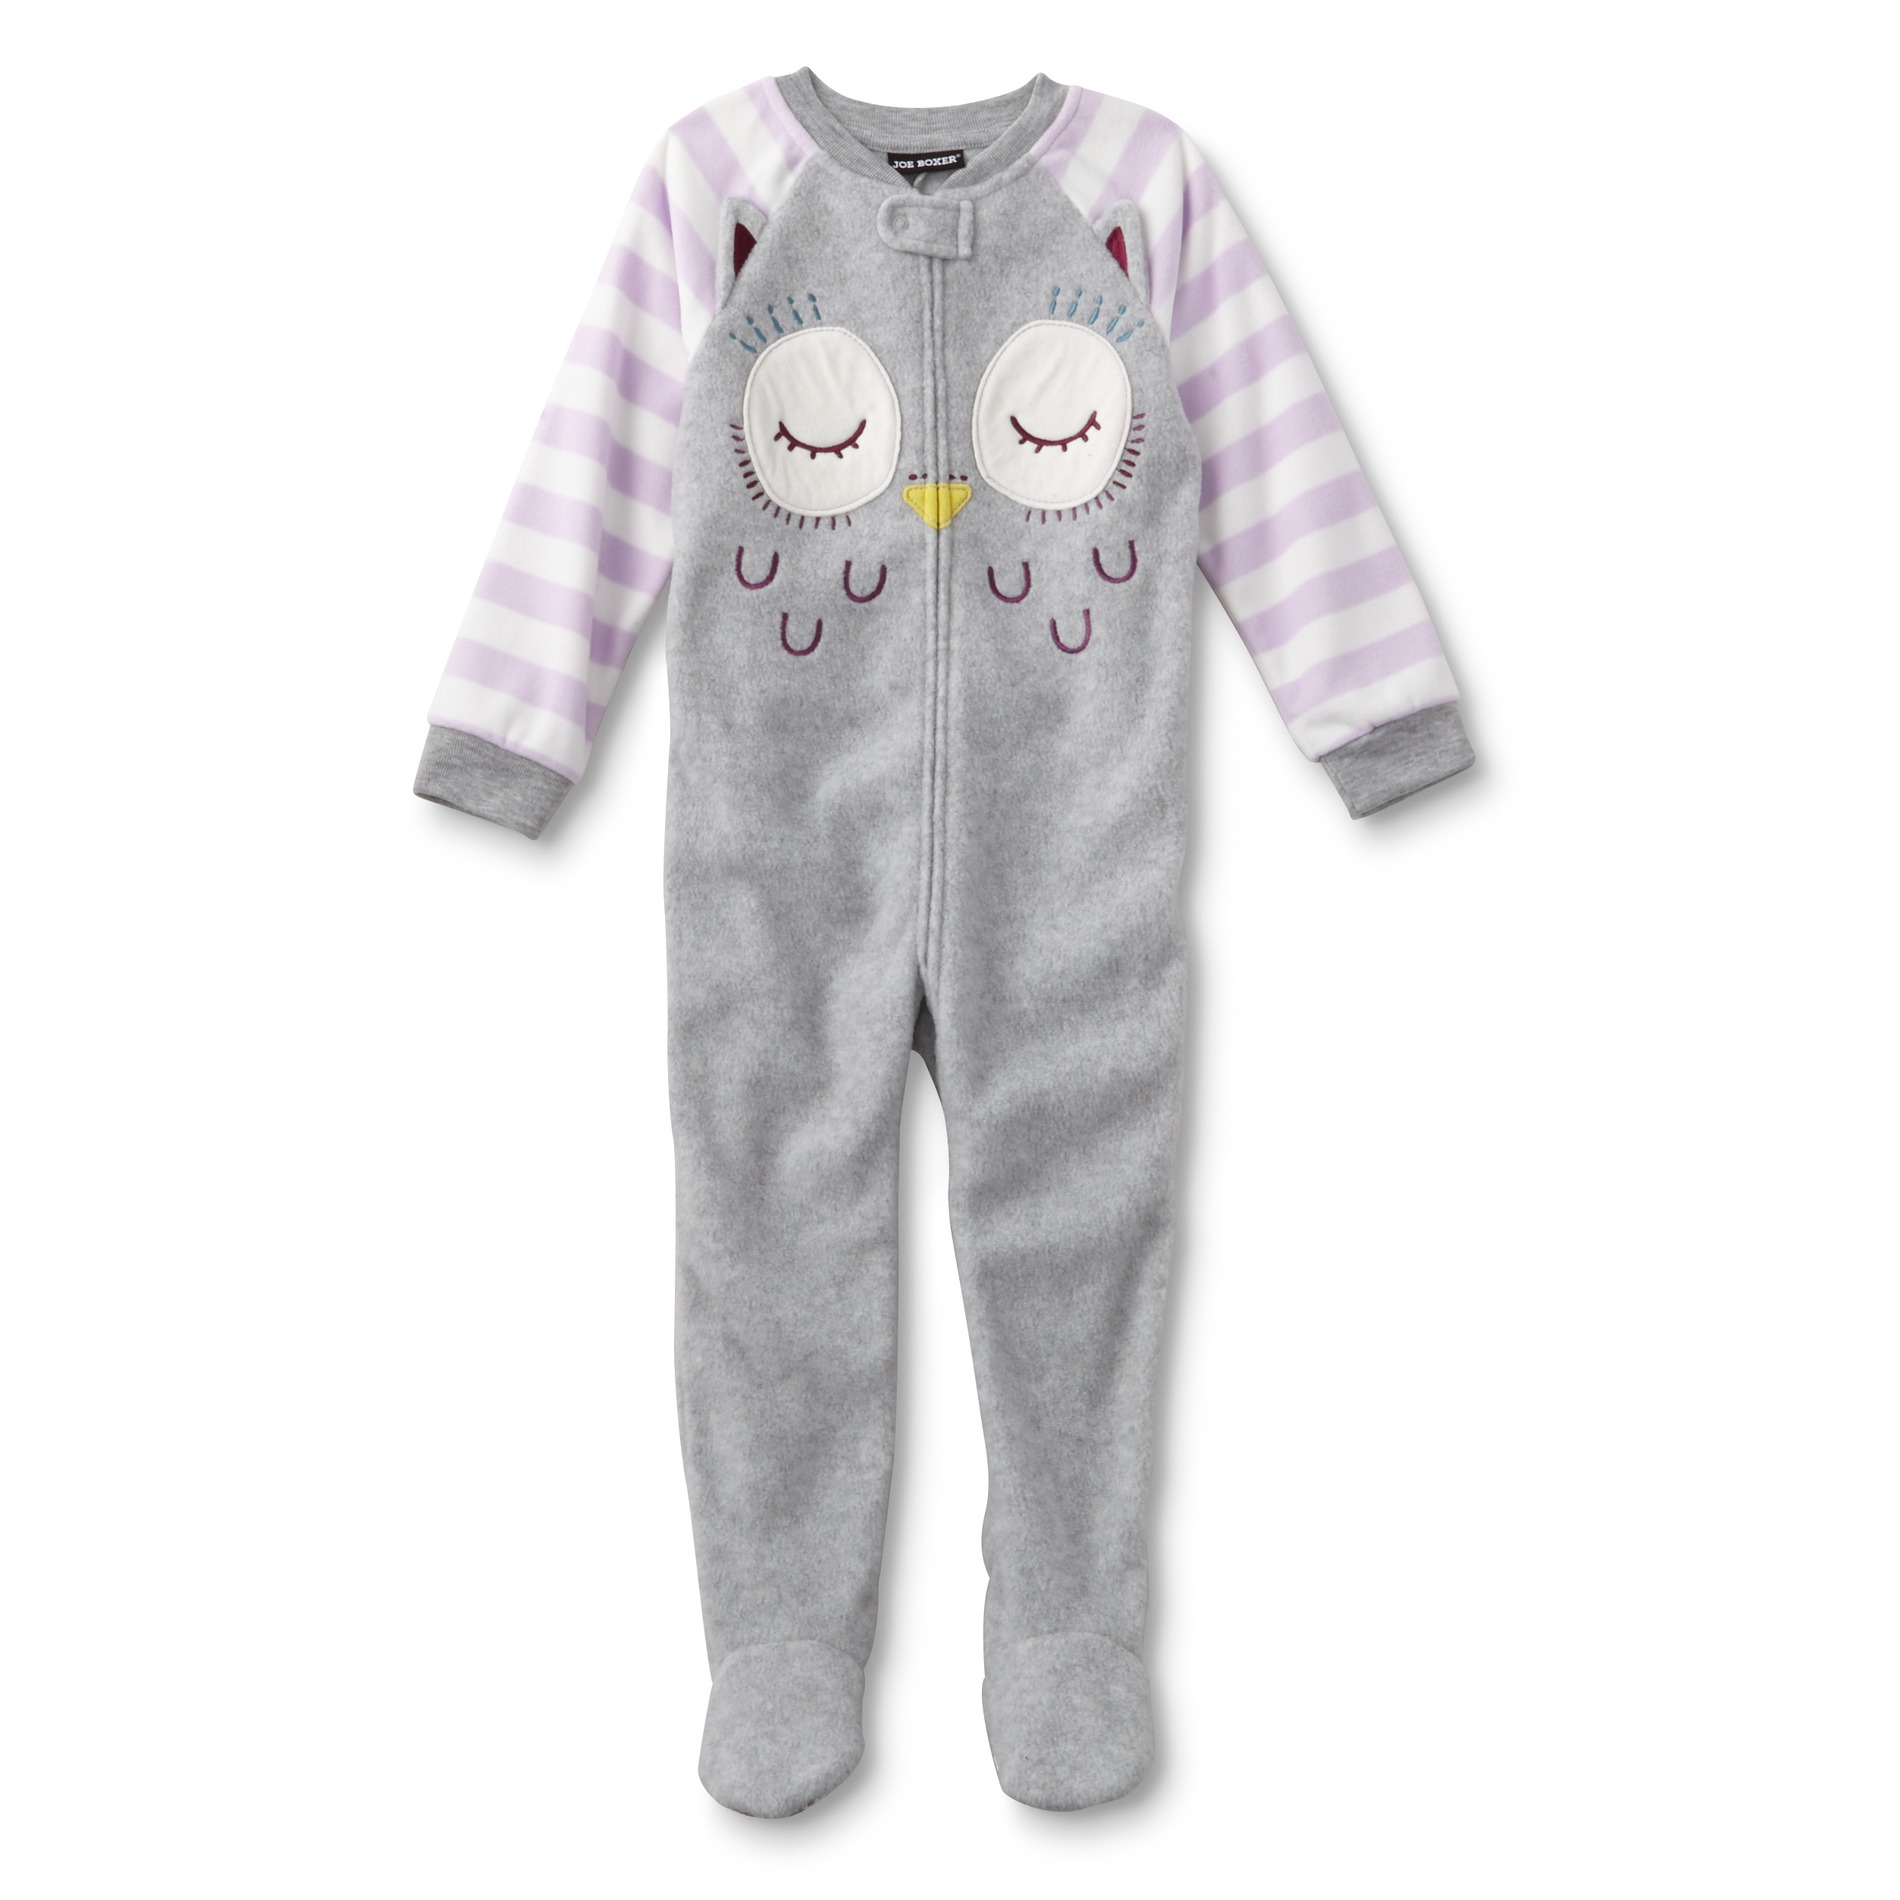 Joe Boxer Infant & Toddler Girl's Sleeper Pajamas - Owl